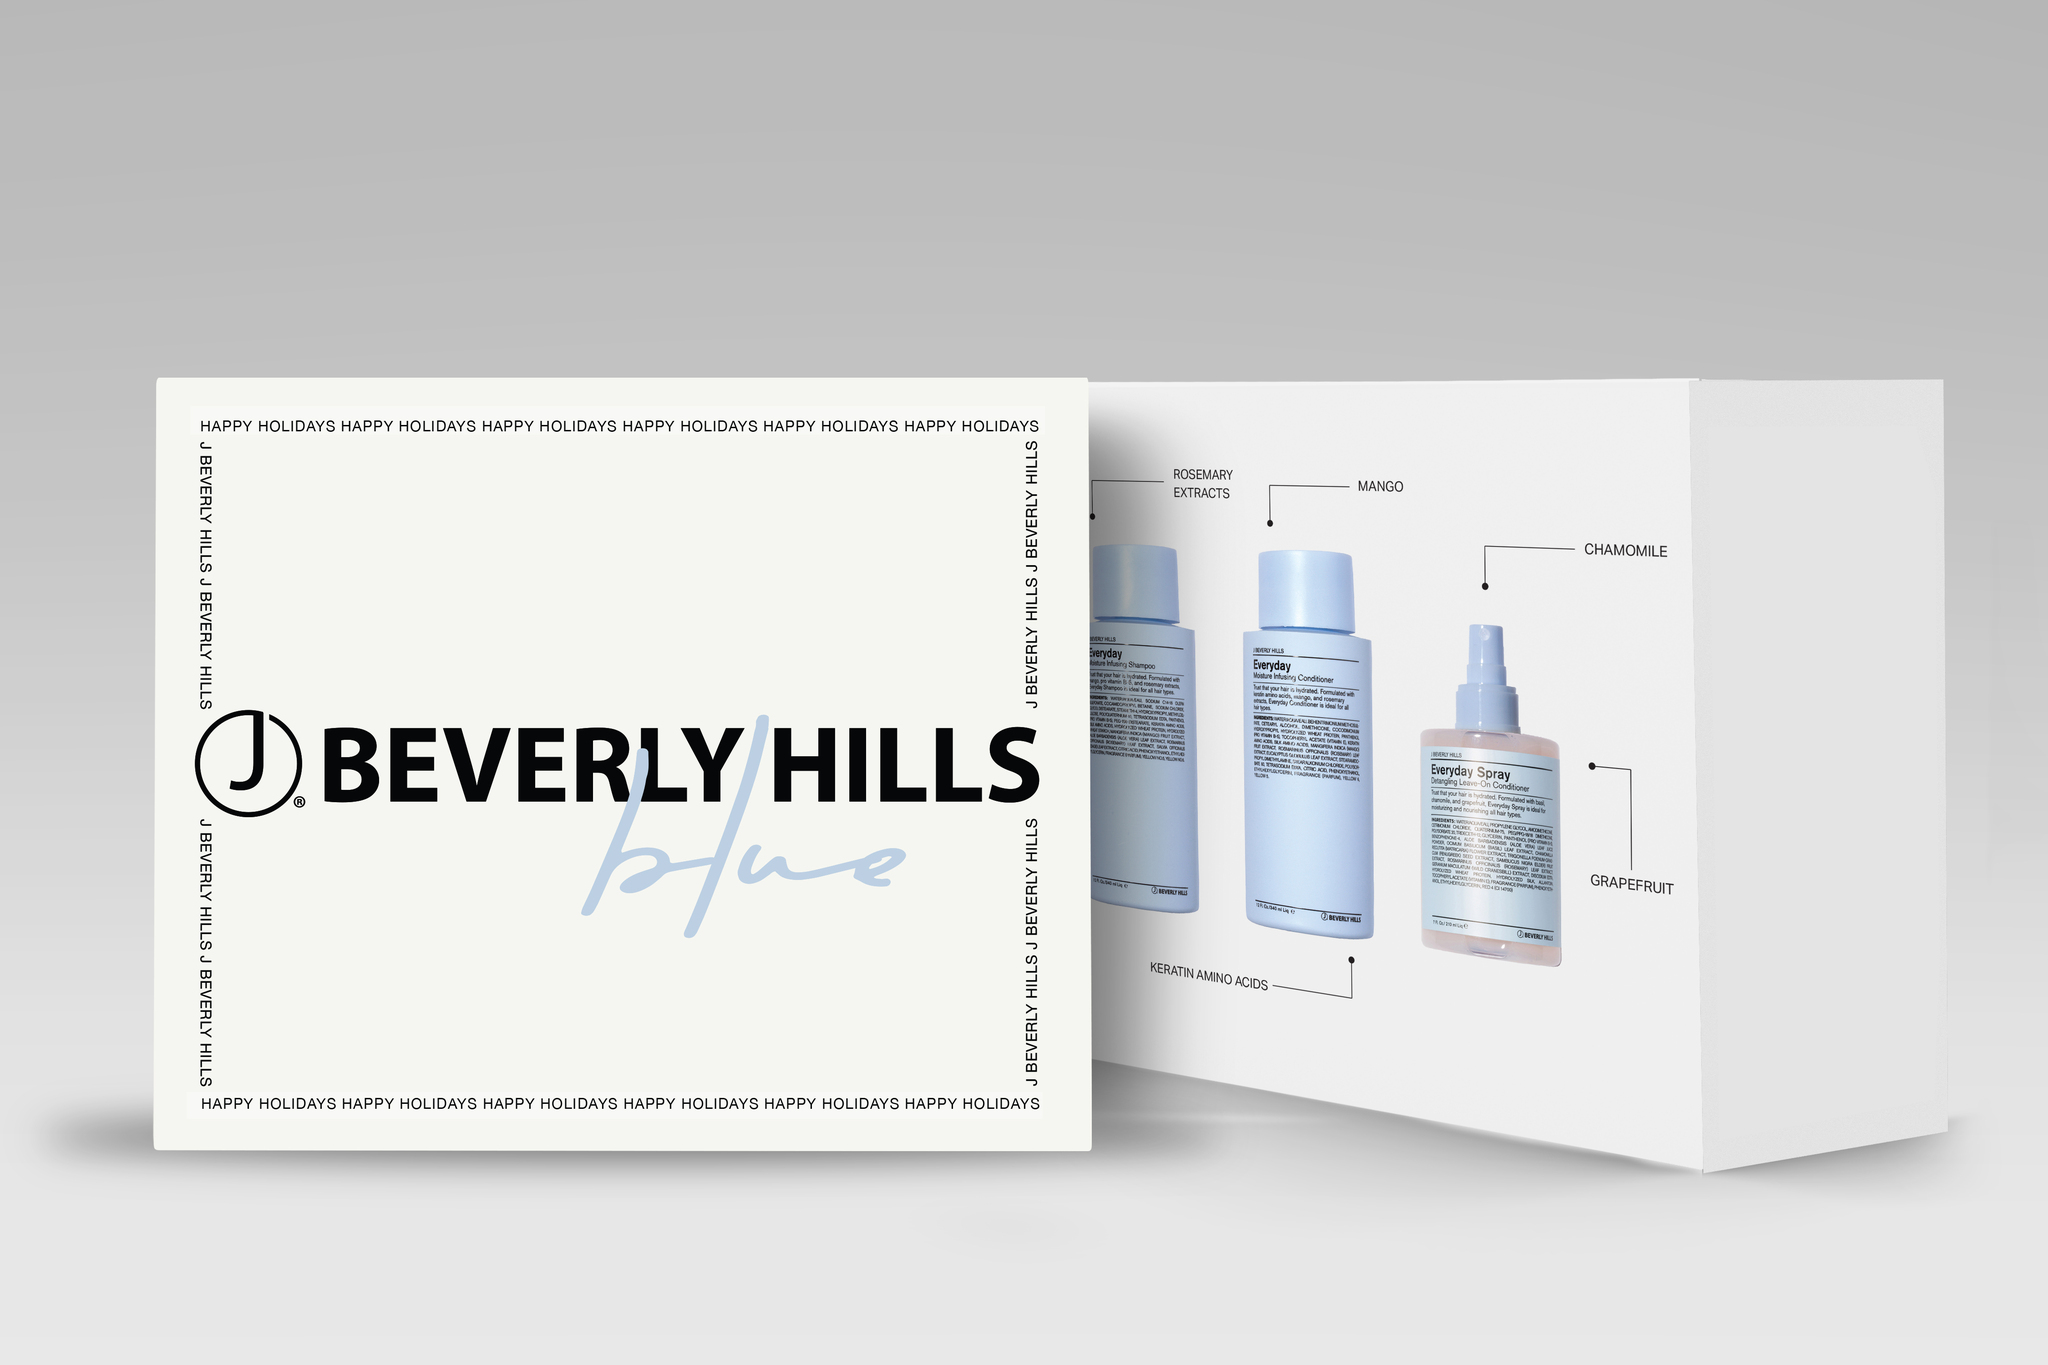 J Beverly Hills Everyday Kit